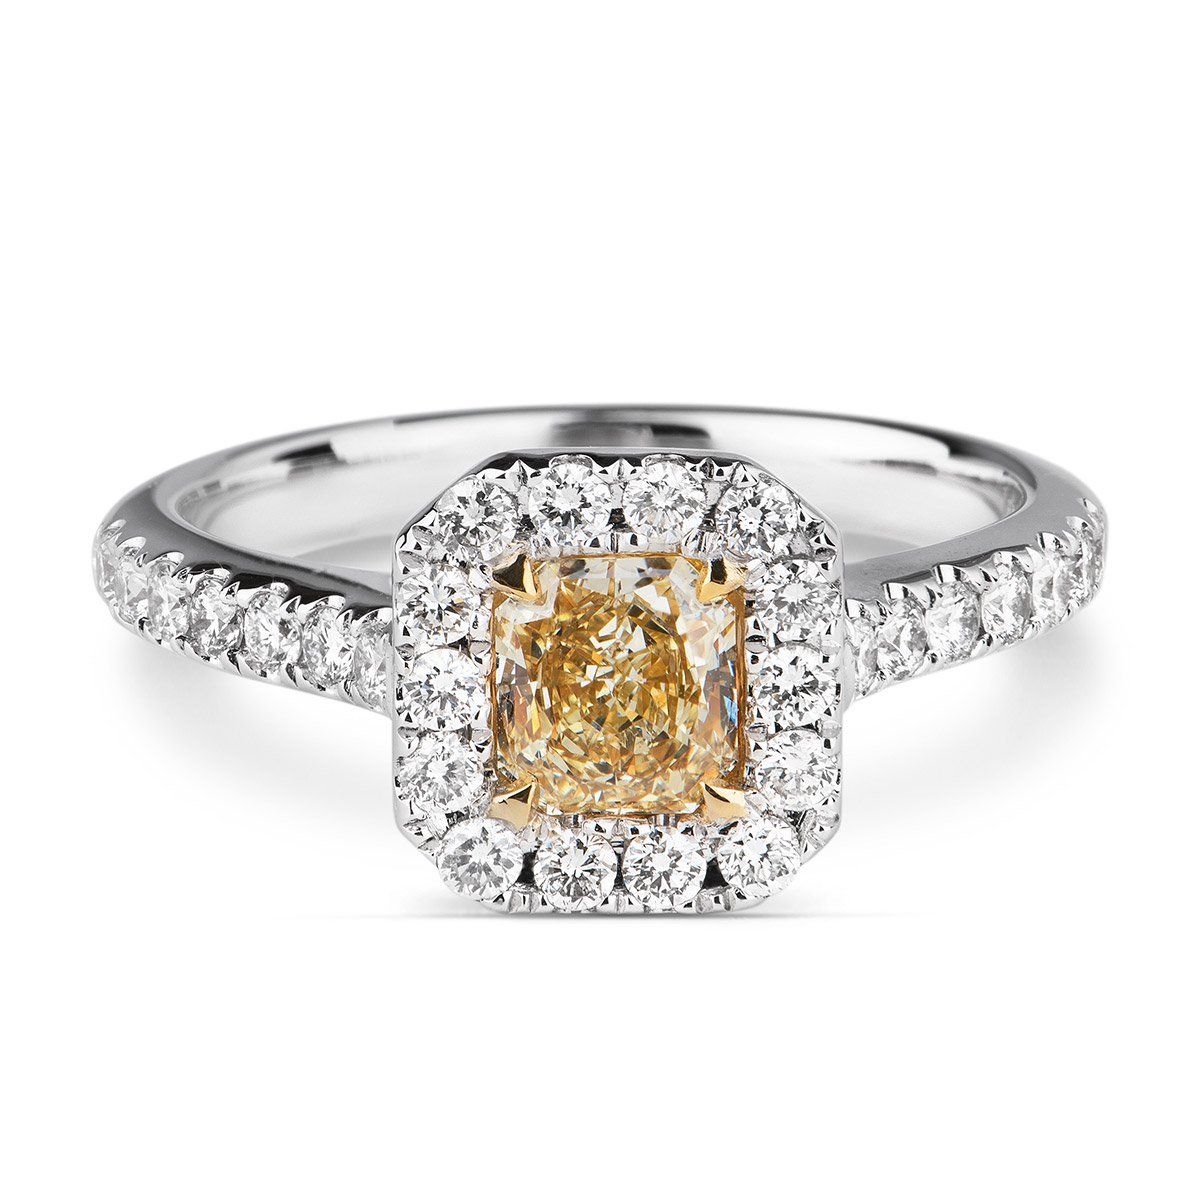 Fancy Light Yellow Diamond Ring, 0.51 Ct. (0.97 Ct. TW), Radiant shape, CGTC Certified, 10170723988